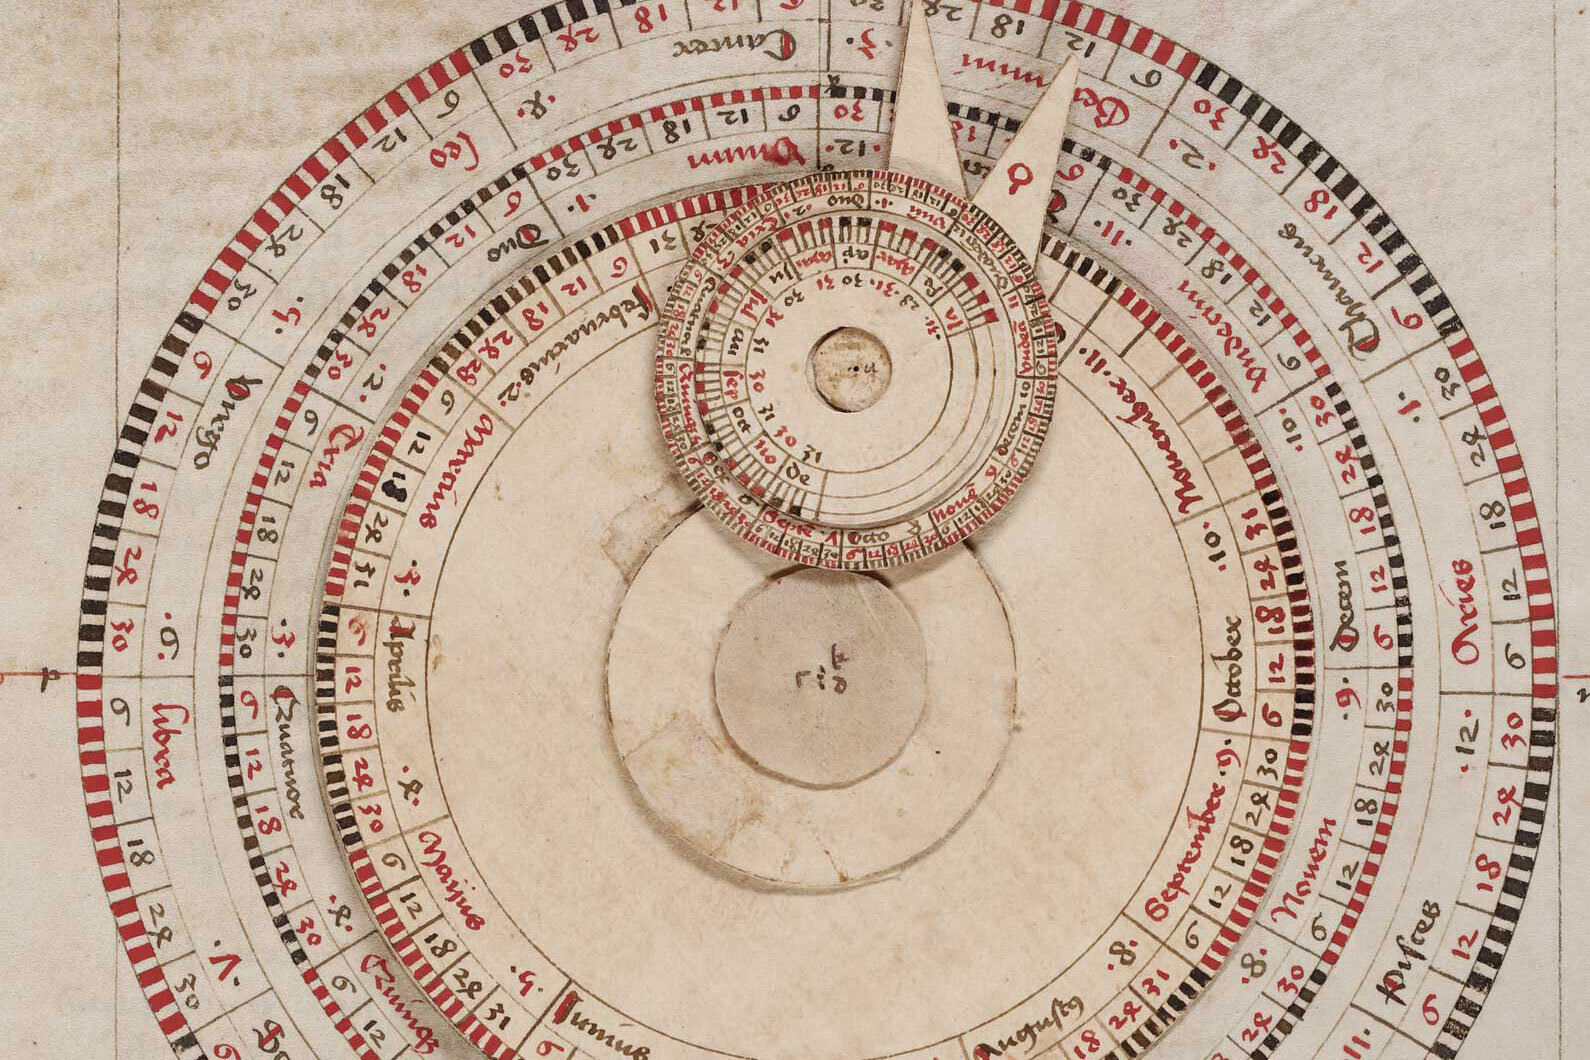 Digitization of Medieval Manuscripts